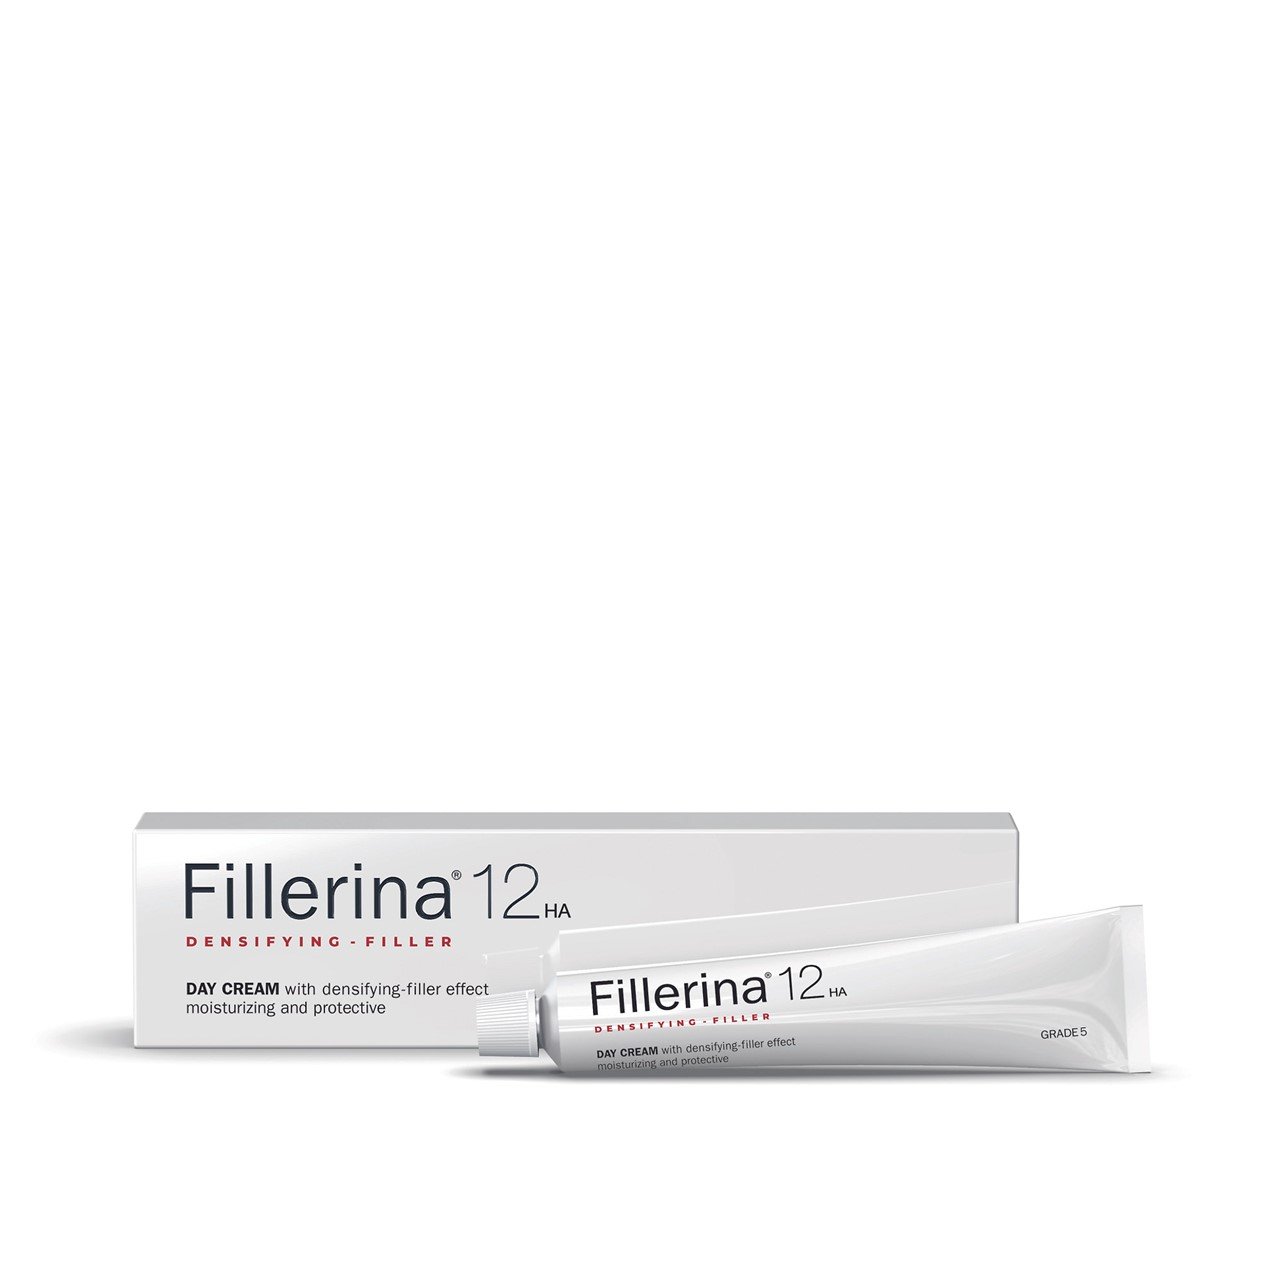 Fillerina 12HA Densifying-Filler Day Cream Grade 5 50ml (1.69fl oz)